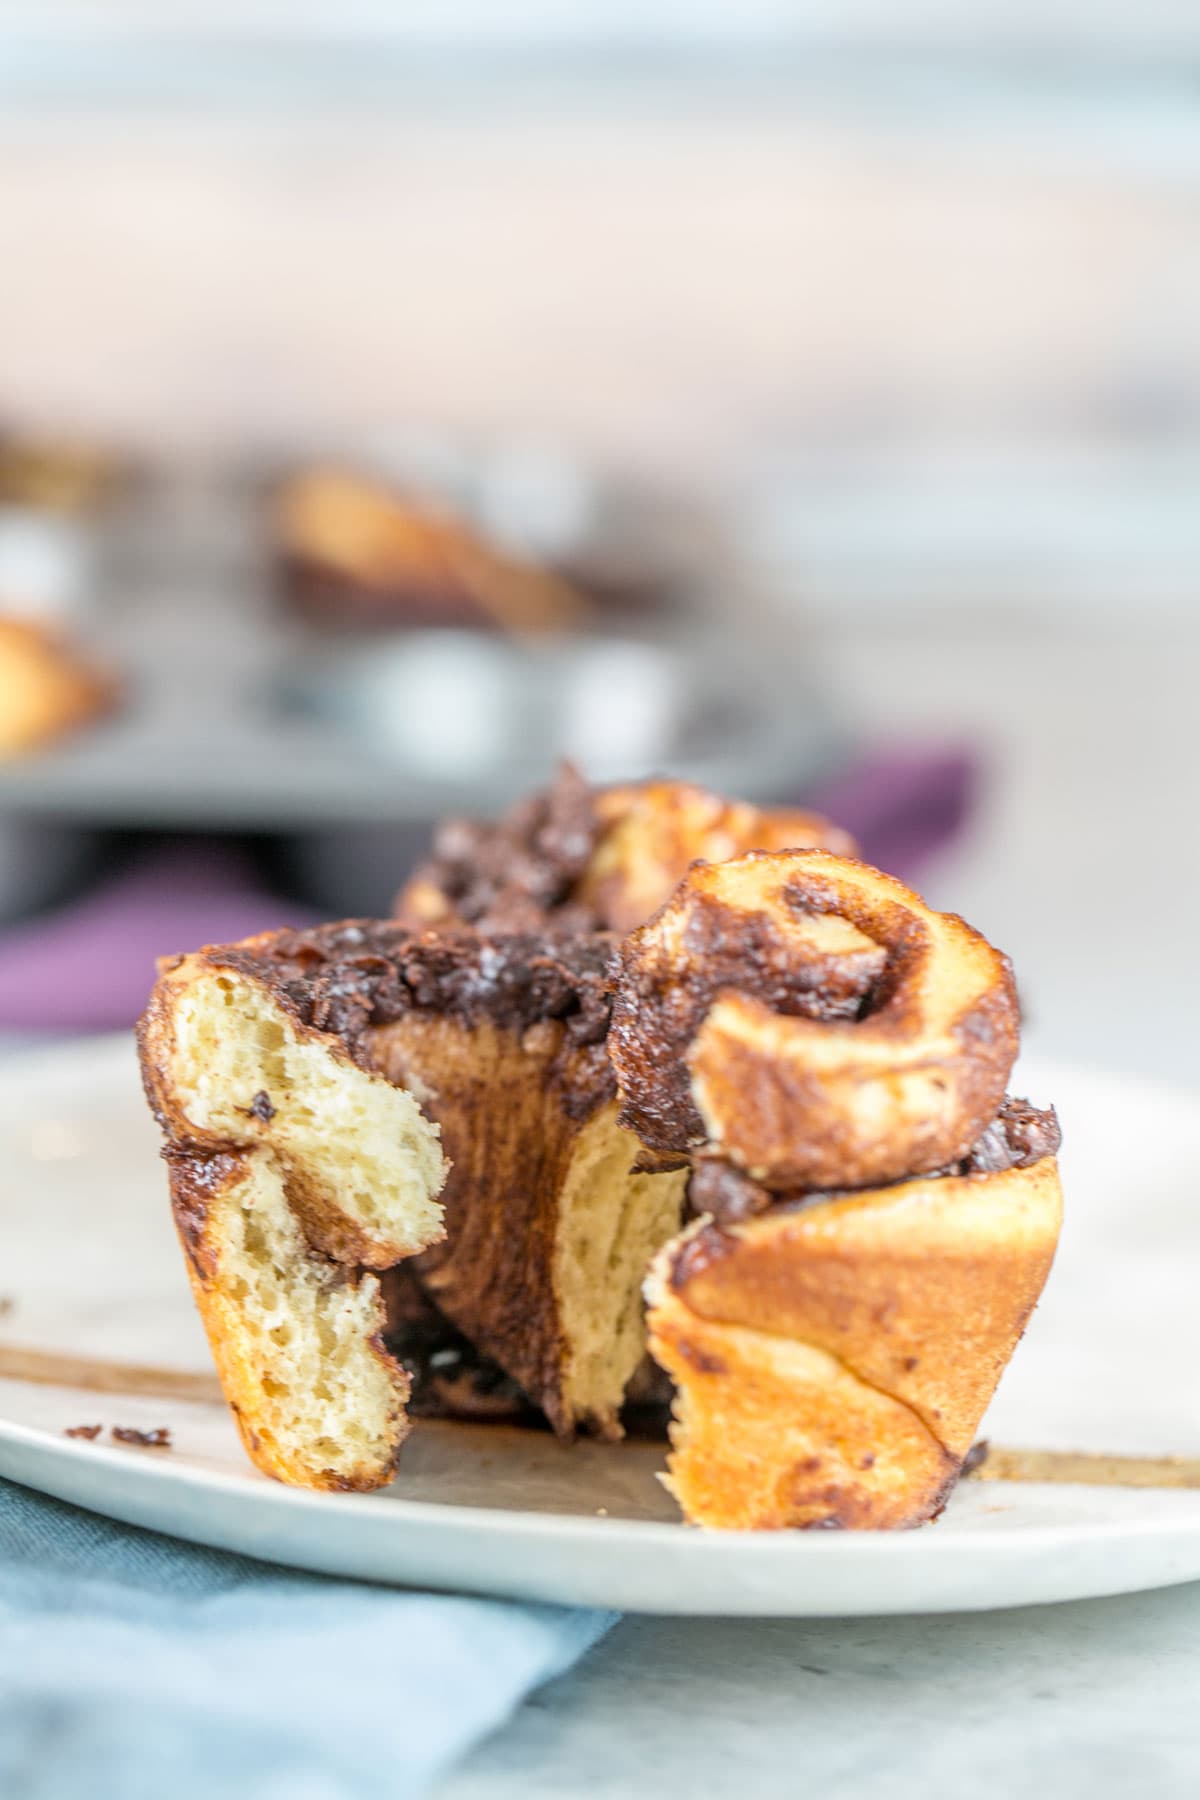 swirled chocolate babka muffin on a plate torn open to show the chocolate swirled inside